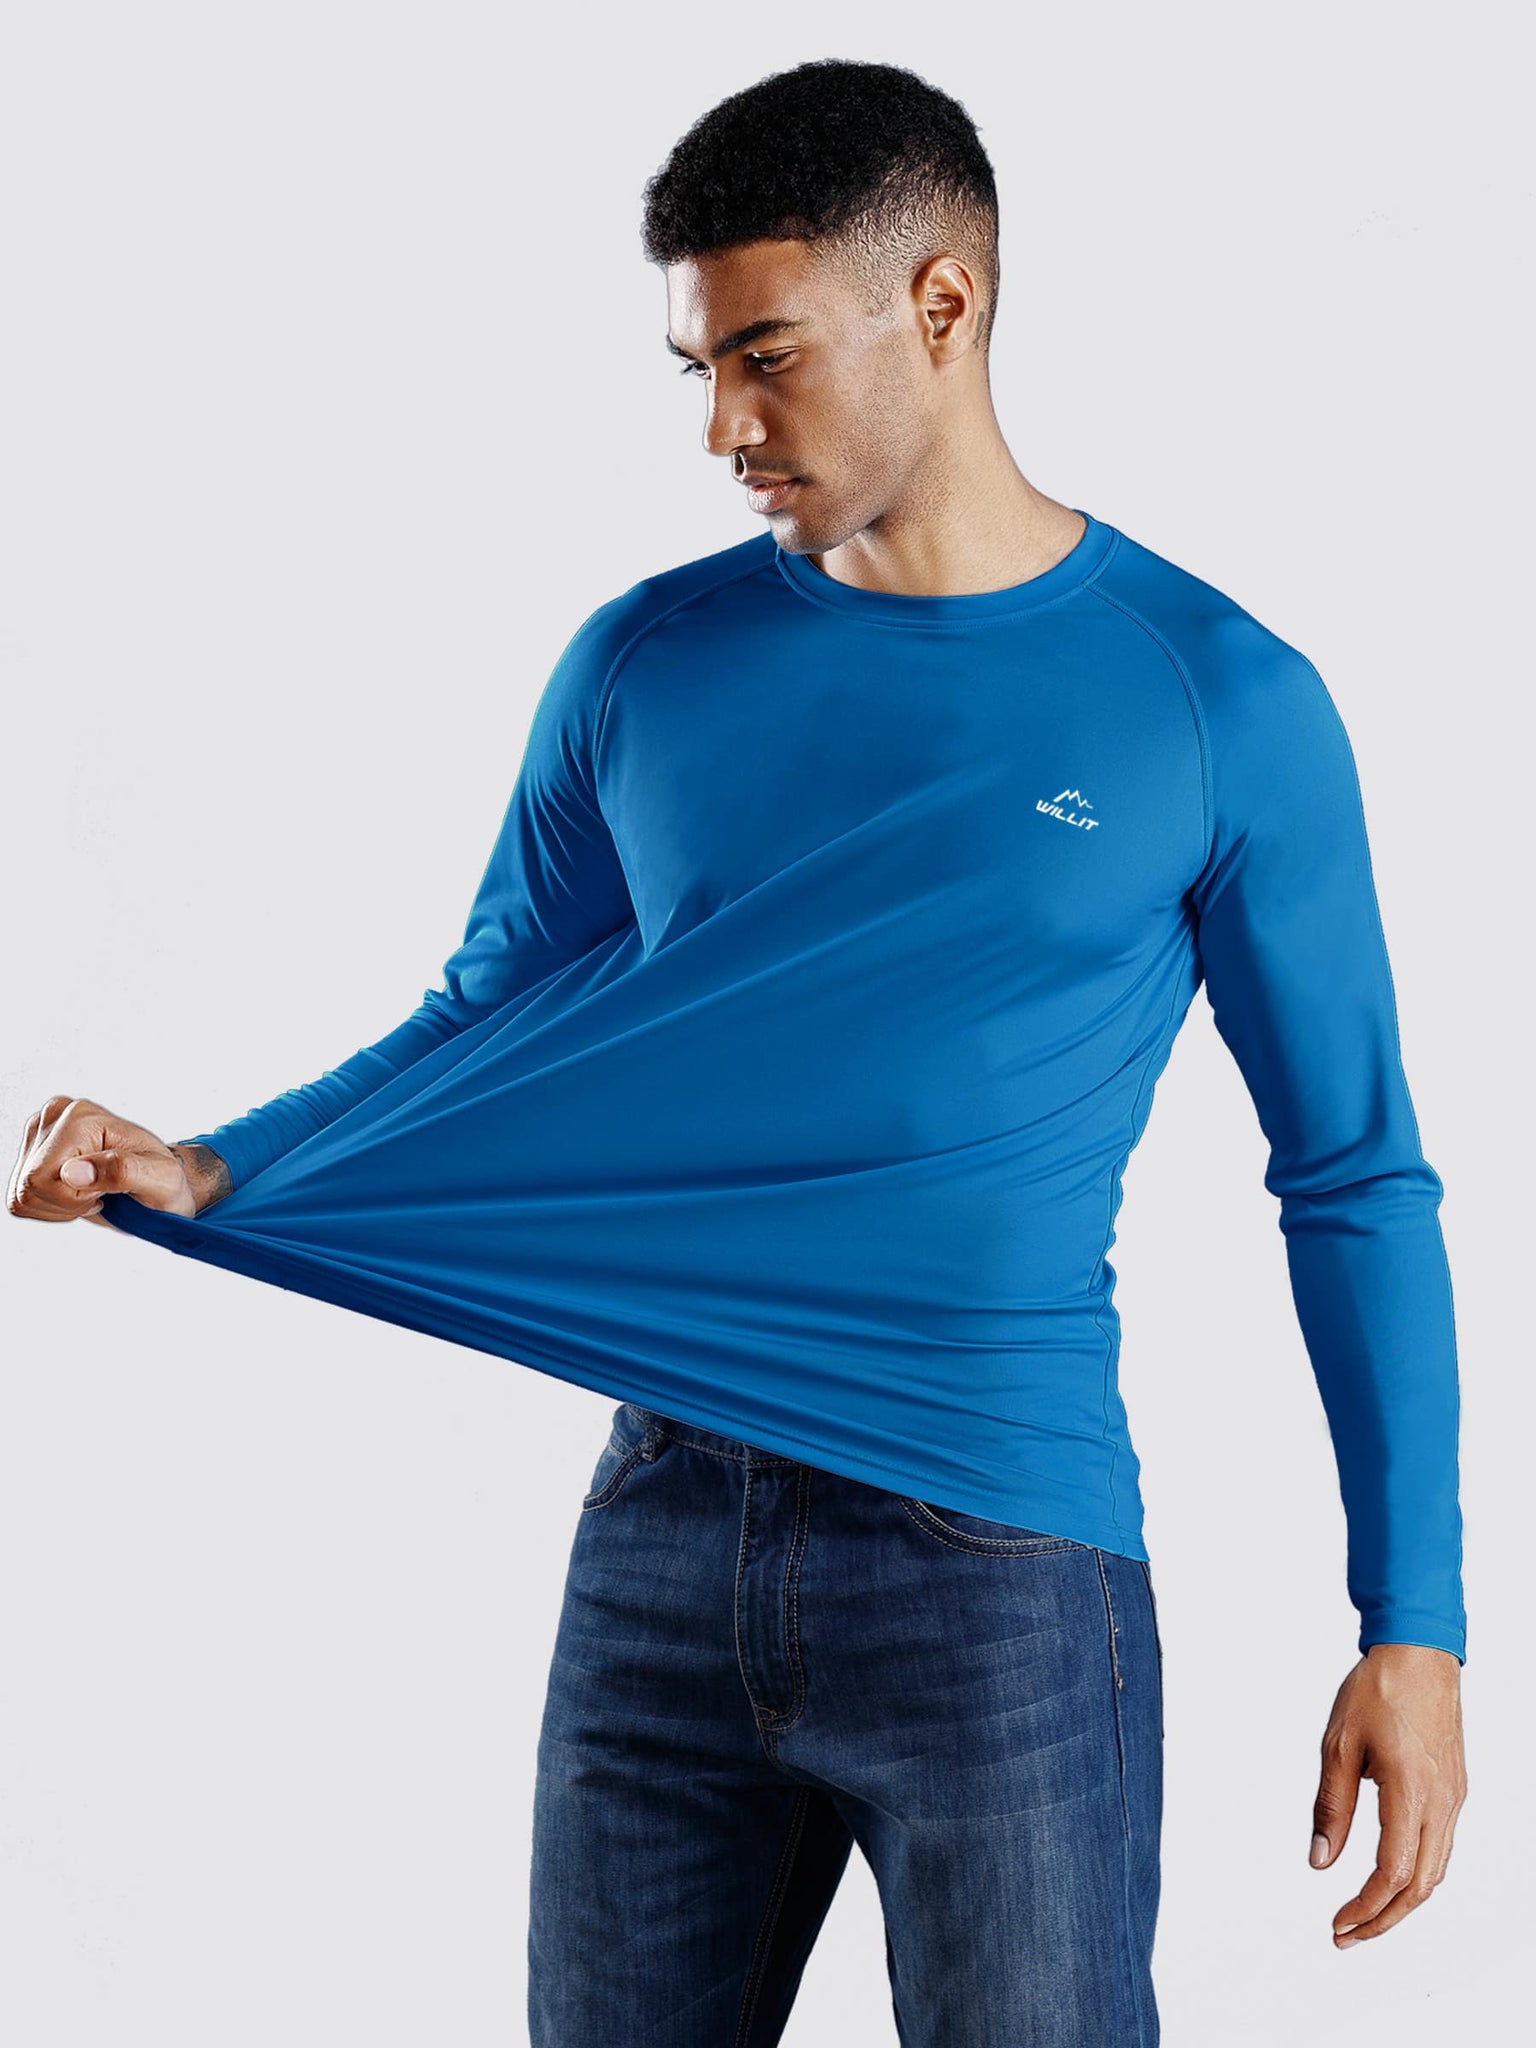 Willit Men's UPF 50+ Sun Hoodie Fishing Shirt Half Zip Long Sleeve SPF  Hiking Shirt Lightweight Brilliant Blue XXL